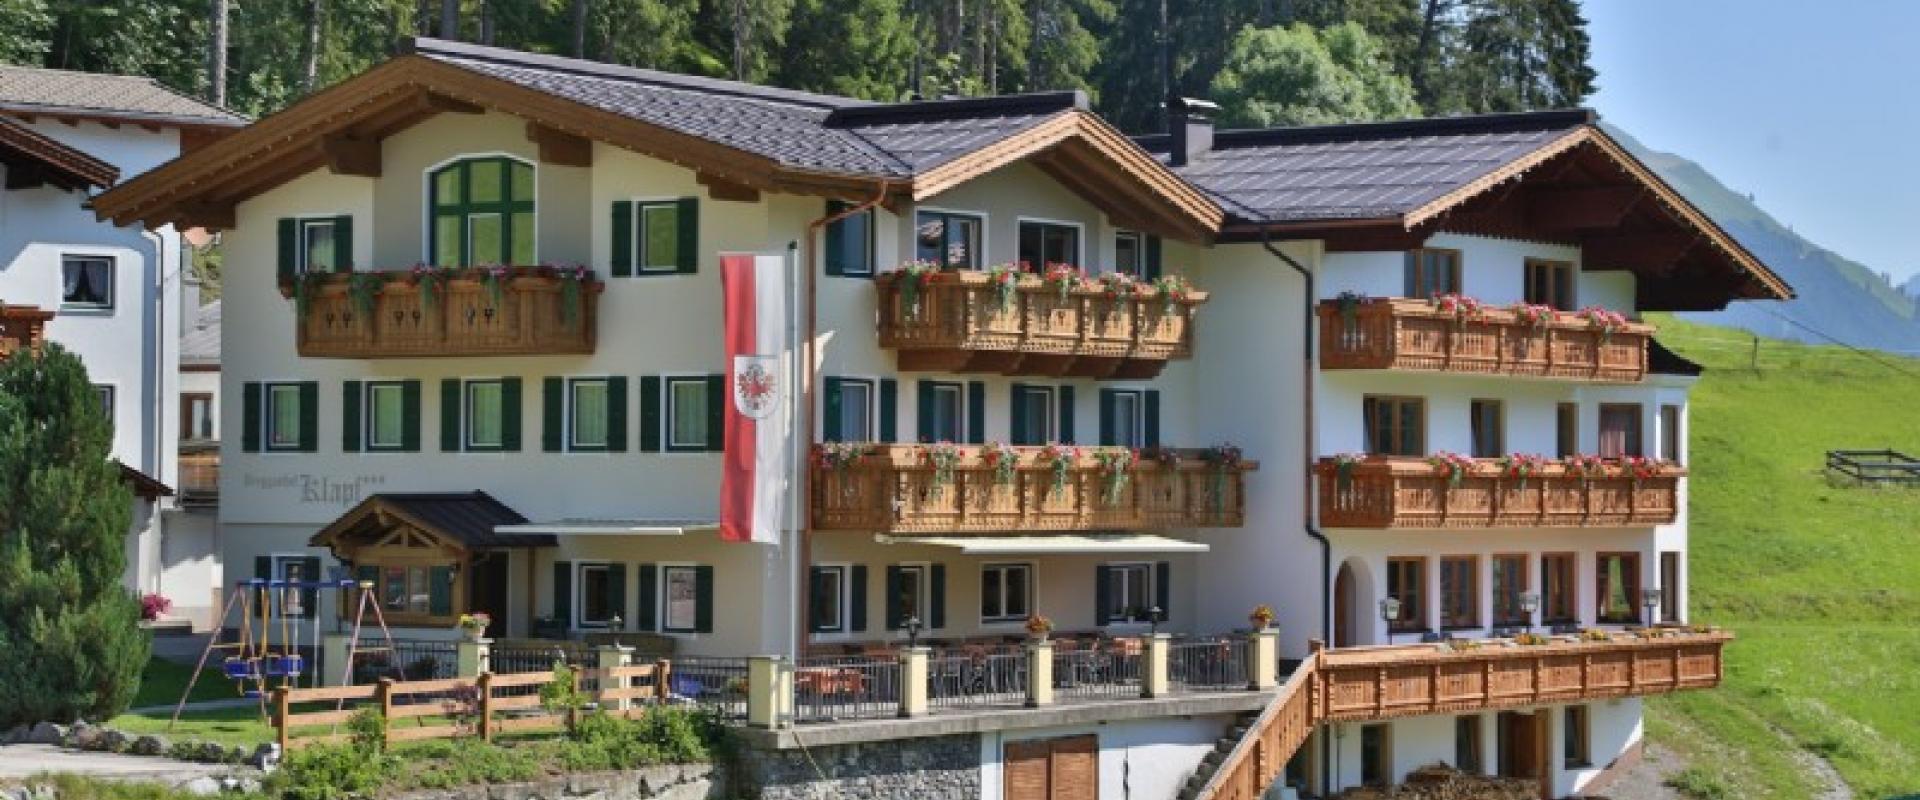 07140 Biker Hotel Klapf in Tirol.jpg